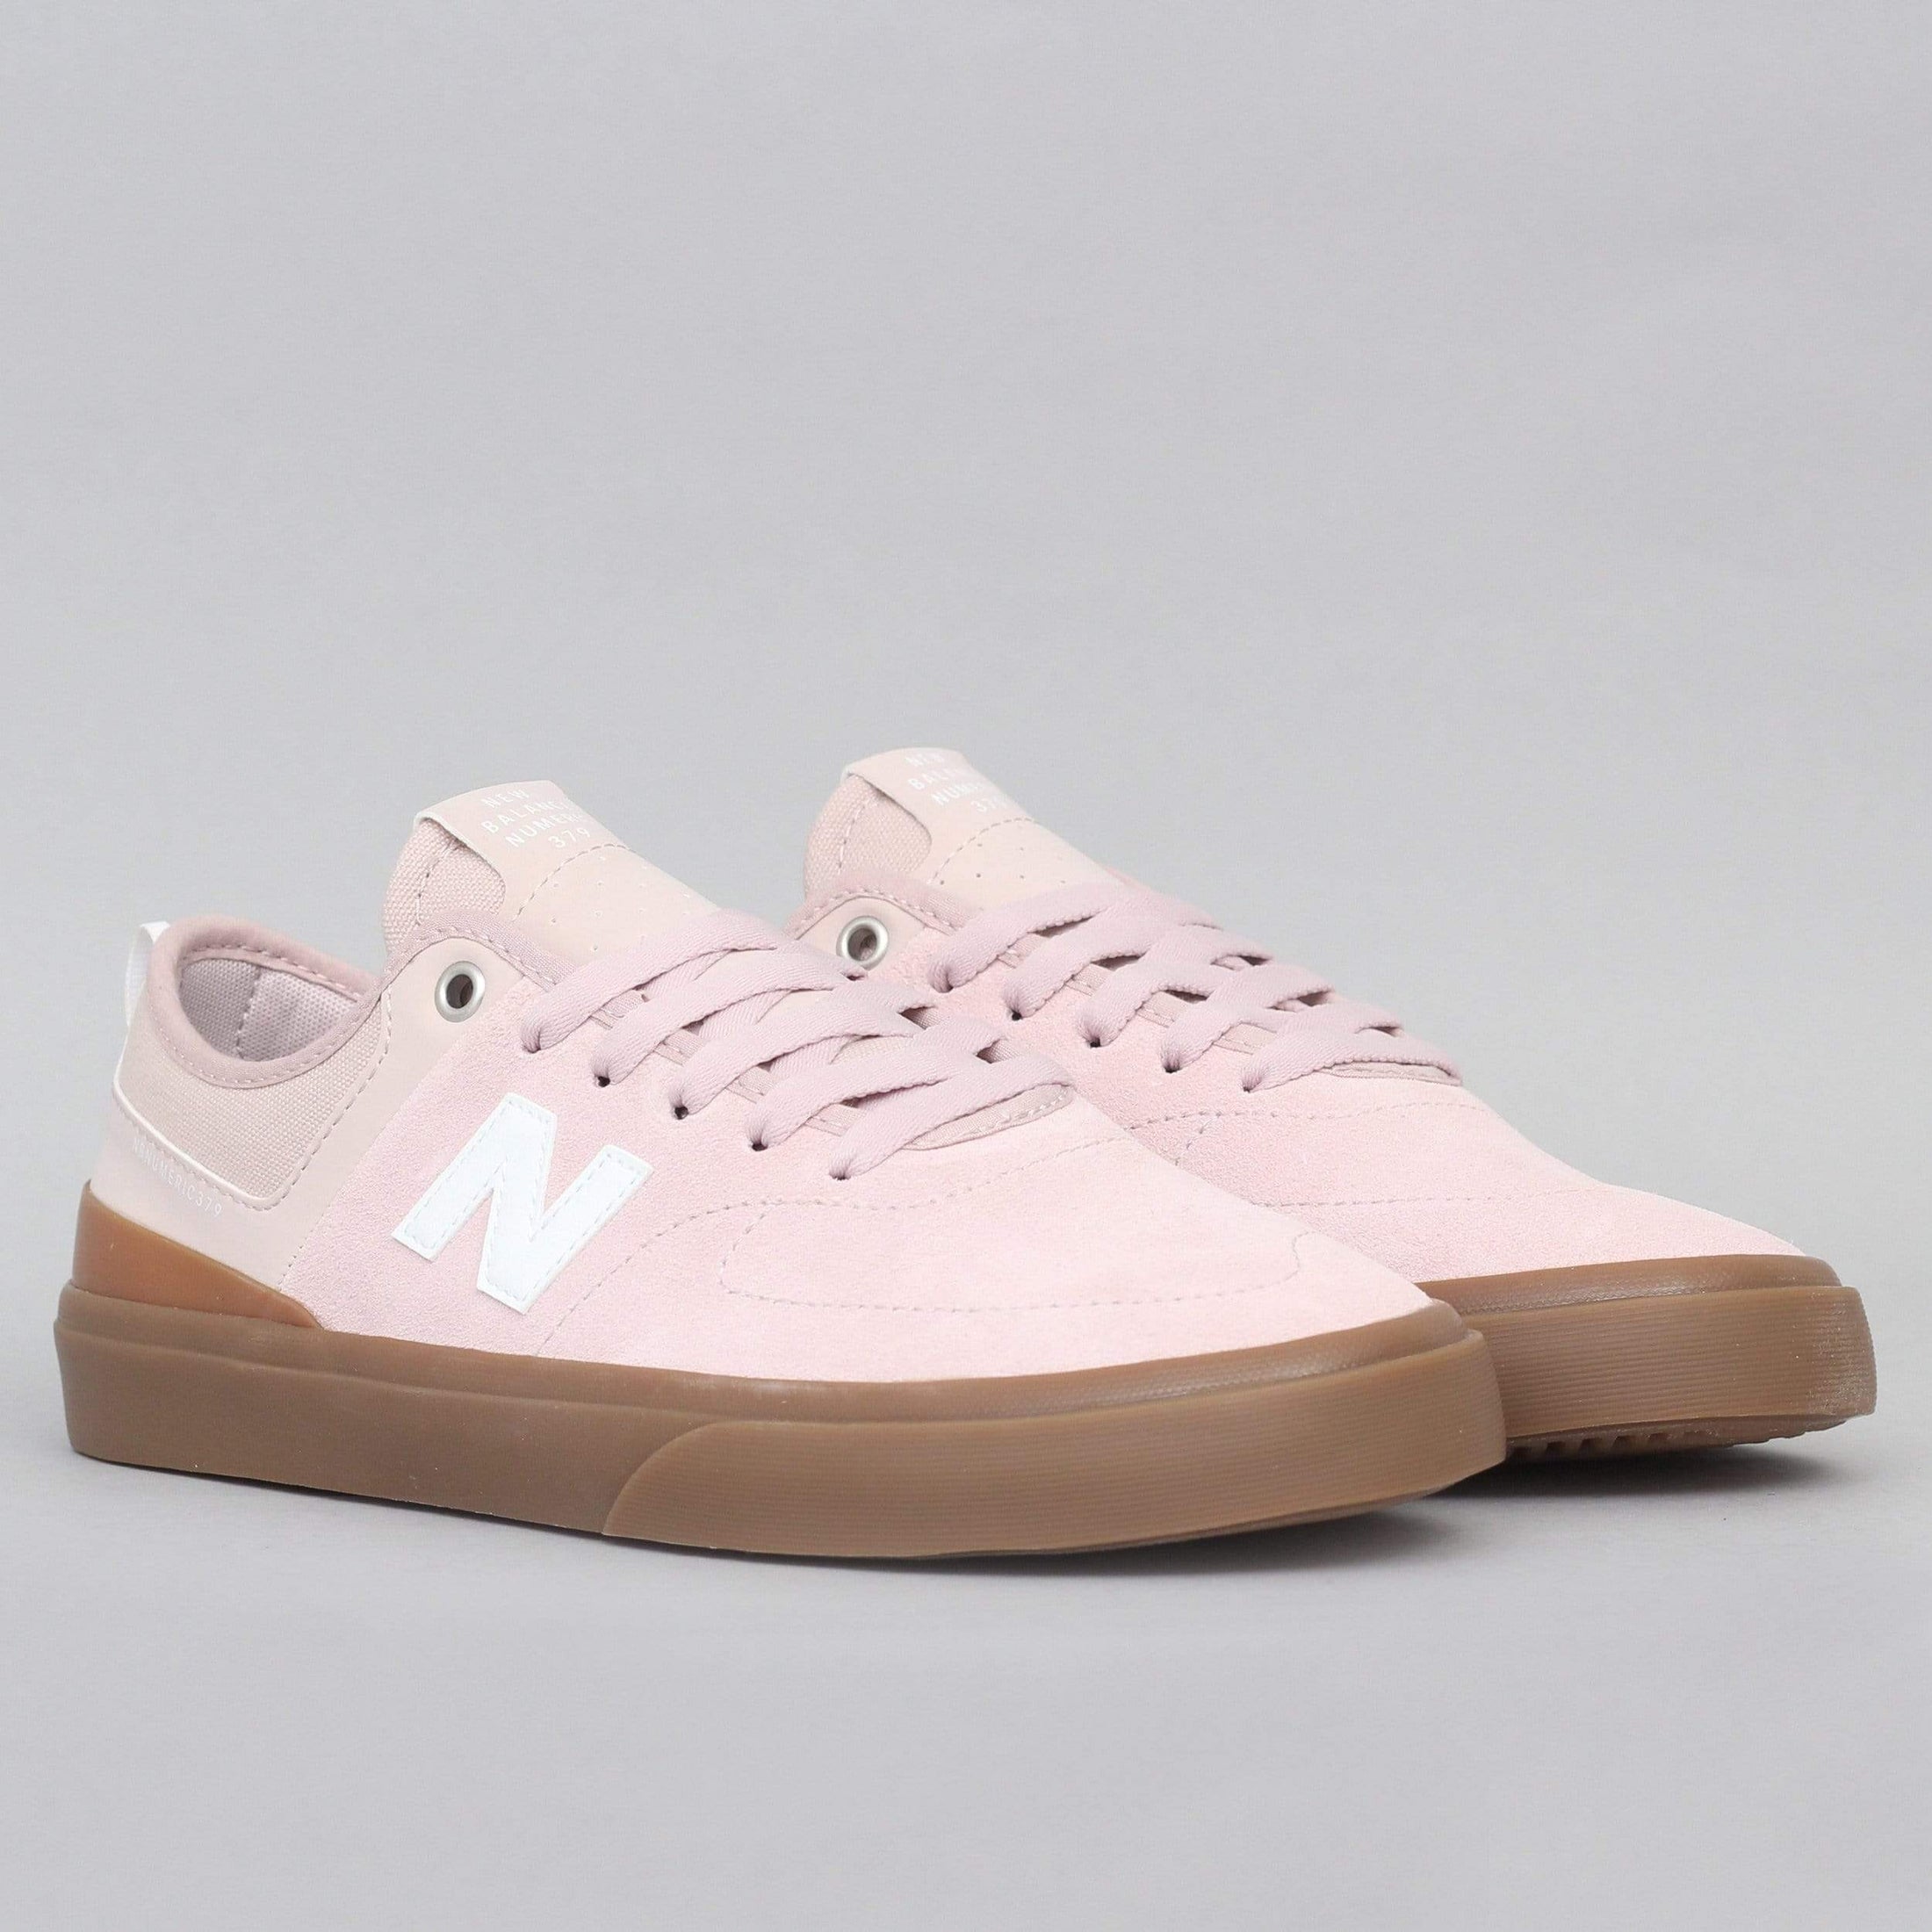 New Balance 379 Shoes Pink / Gum